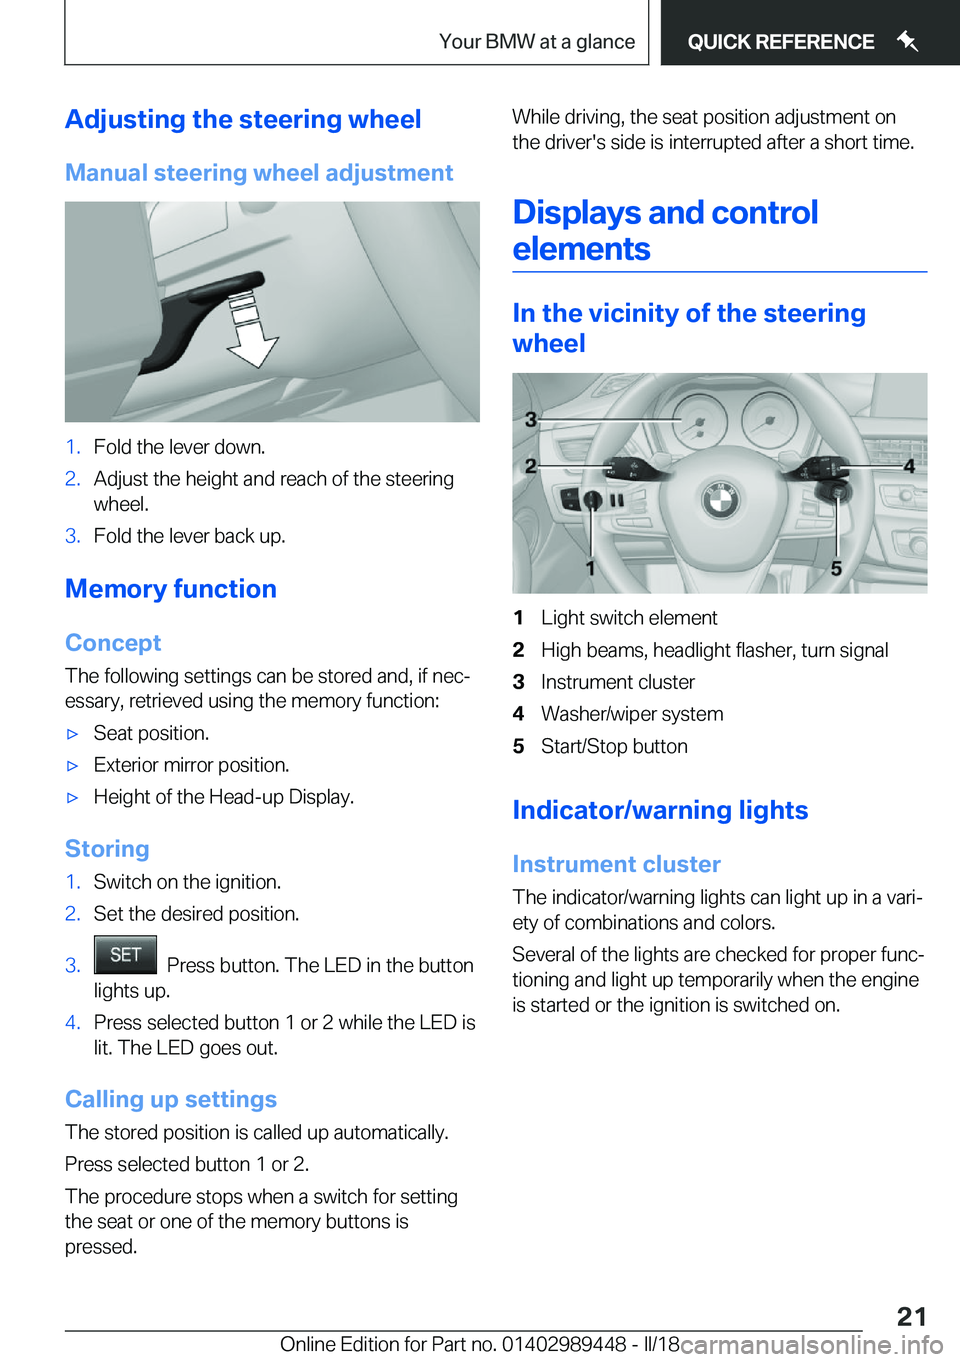 BMW X2 2018 Owners Manual �A�d�j�u�s�t�i�n�g��t�h�e��s�t�e�e�r�i�n�g��w�h�e�e�l
�M�a�n�u�a�l��s�t�e�e�r�i�n�g��w�h�e�e�l��a�d�j�u�s�t�m�e�n�t�1�.�F�o�l�d� �t�h�e� �l�e�v�e�r� �d�o�w�n�.�2�.�A�d�j�u�s�t� �t�h�e� �h�e�i�g�